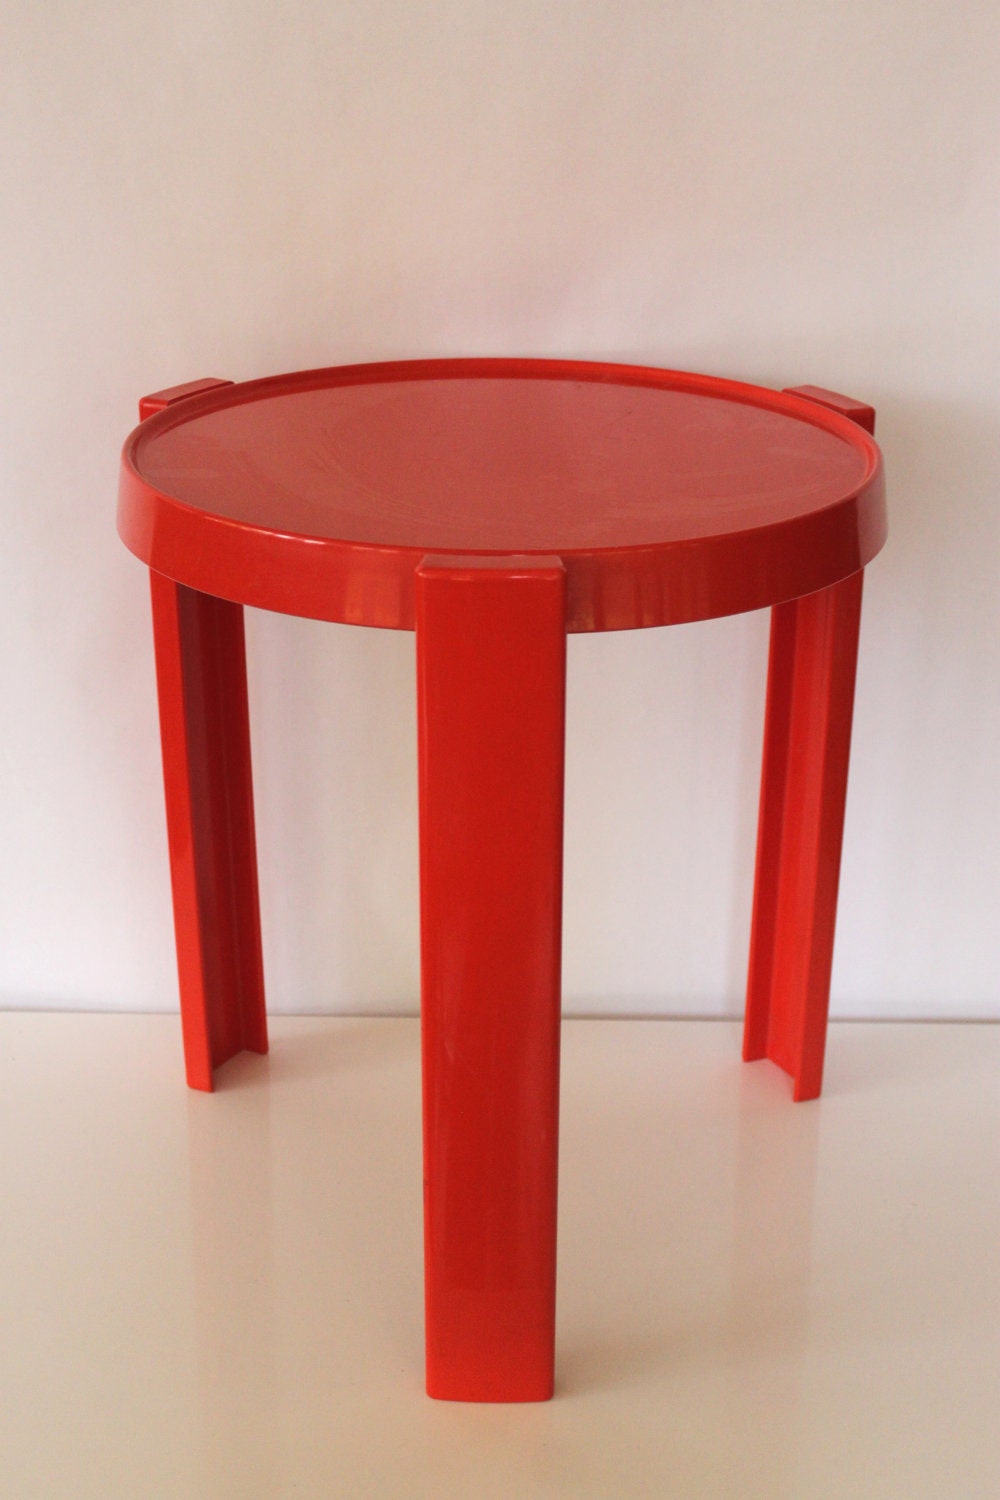 Mod Orange Plastic Side End Table by athomemodern on Etsy